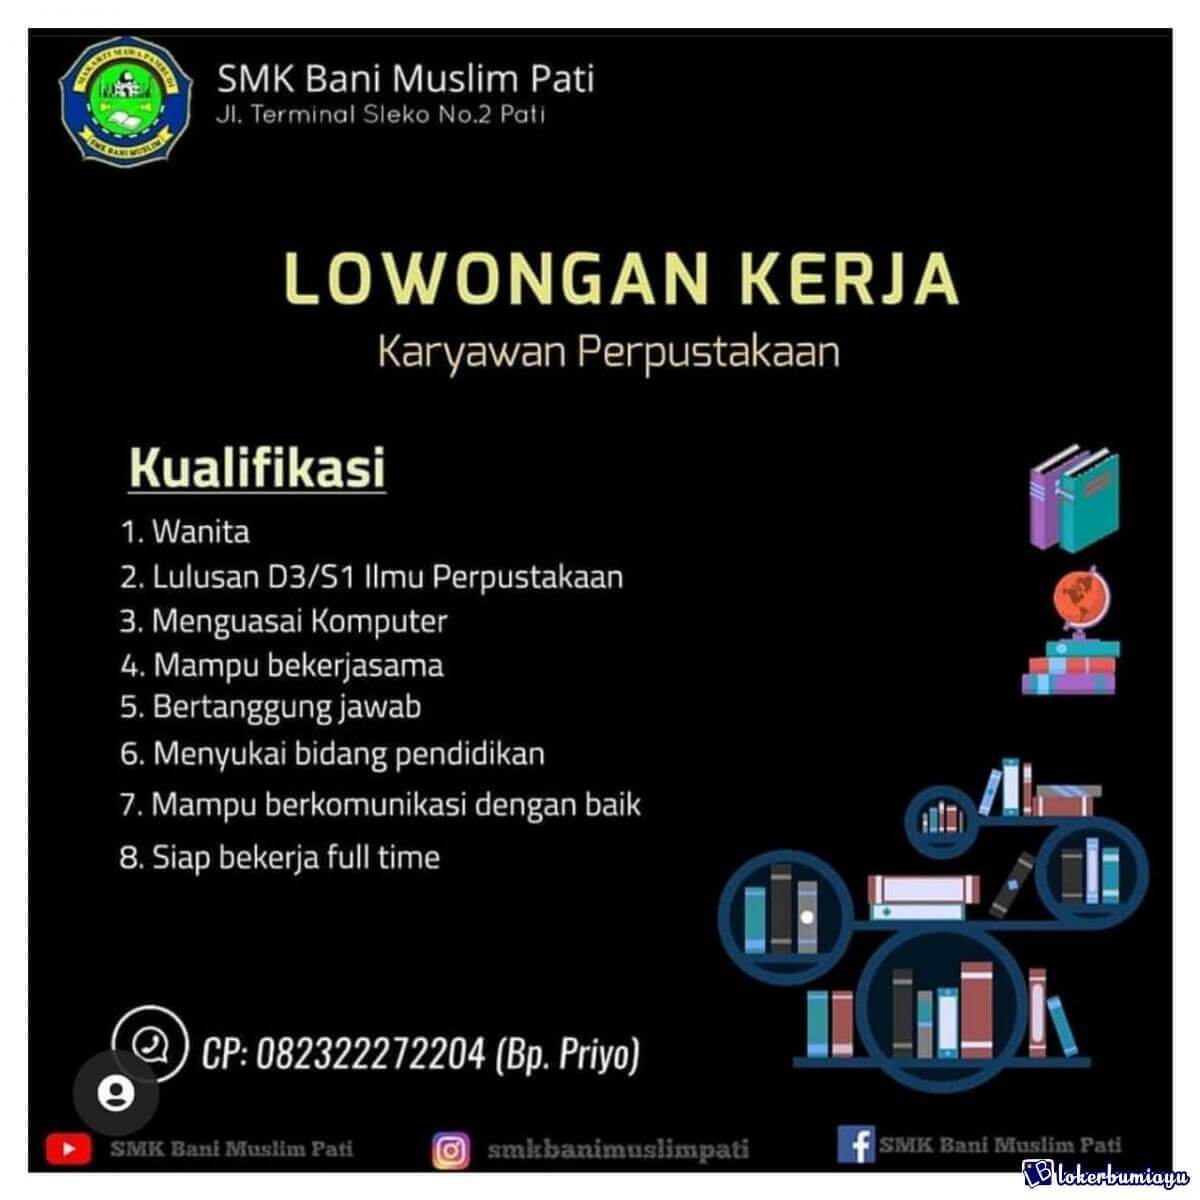 SMK Bani Muslim Pati